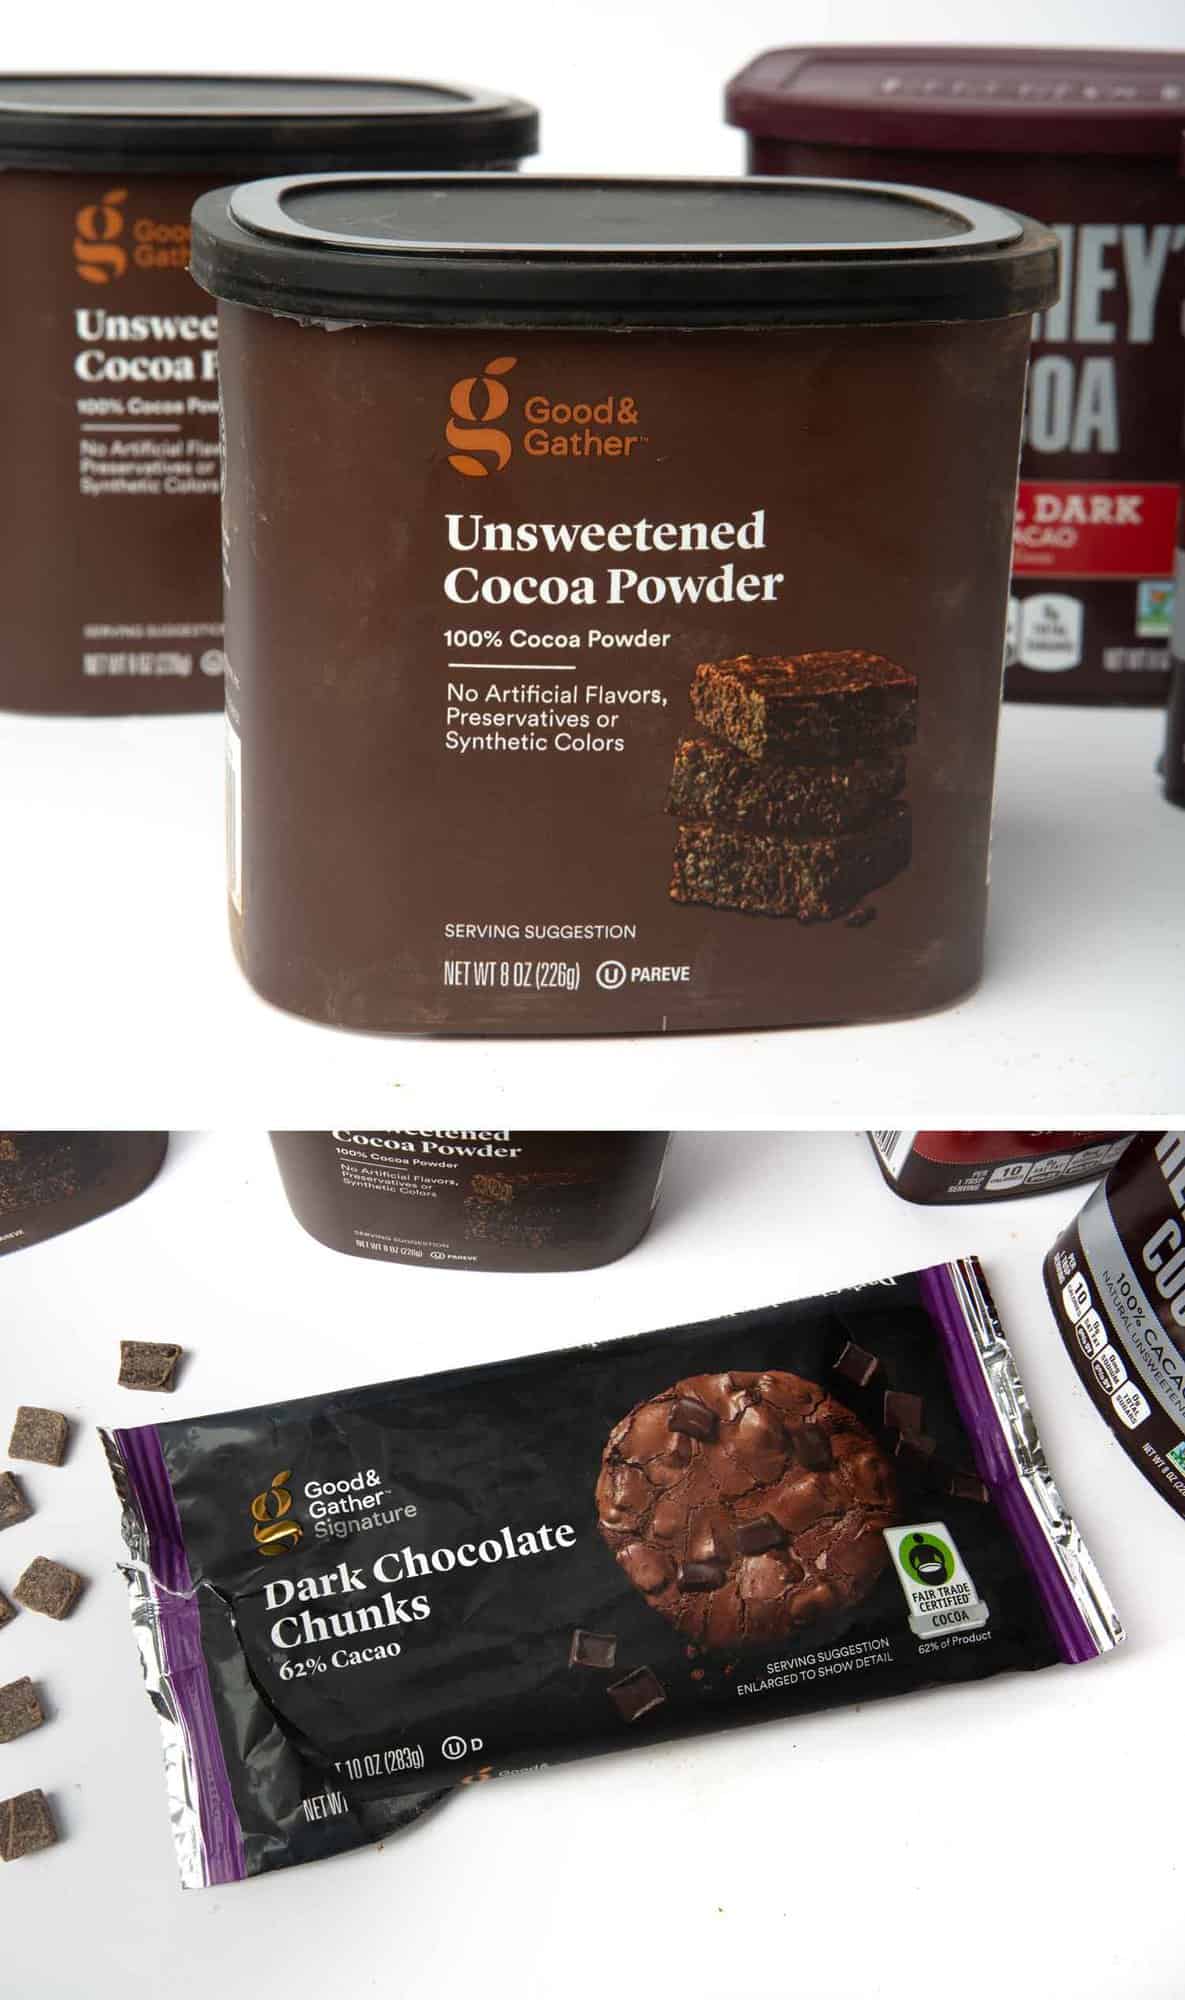 Target brand Good & Gather cocoa powder and dark chocolate chunks